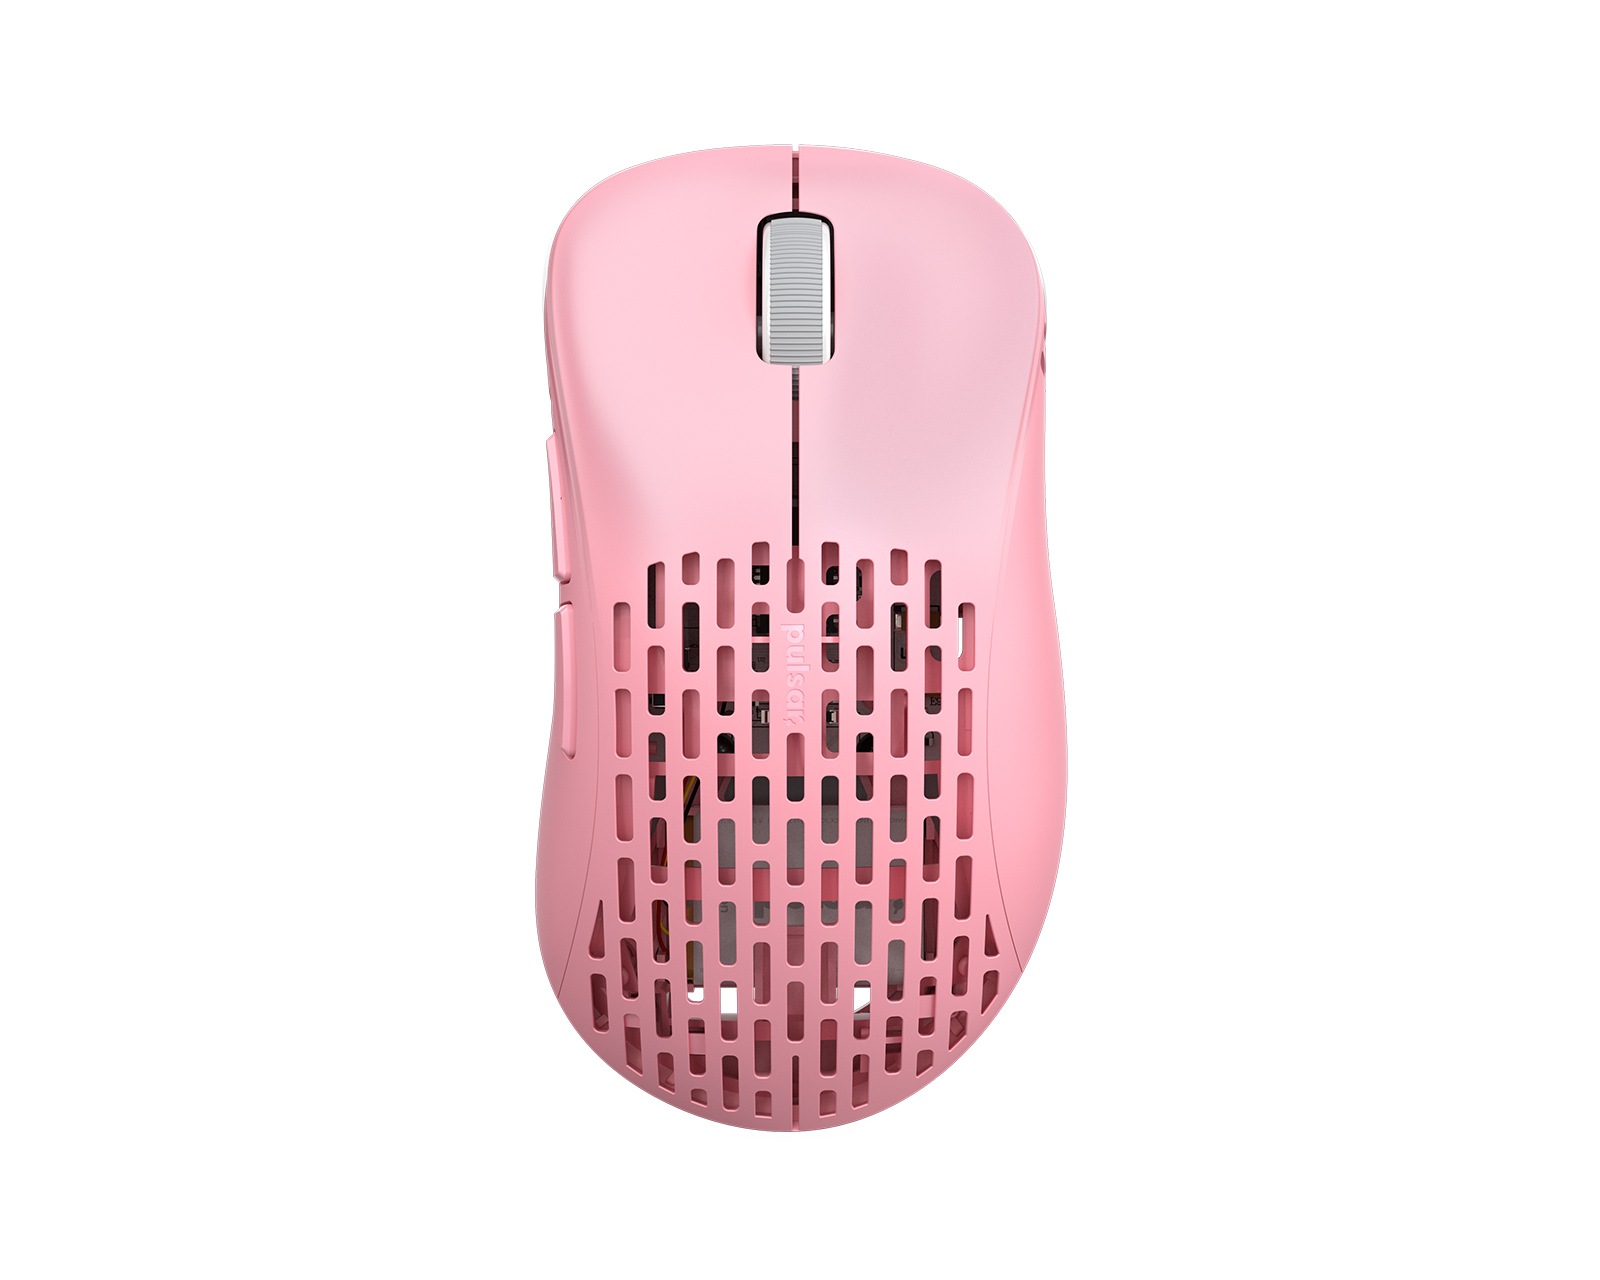 Pulsar Xlite Wireless v2 Mini Gaming Mouse - Pink (DEMO) - us 